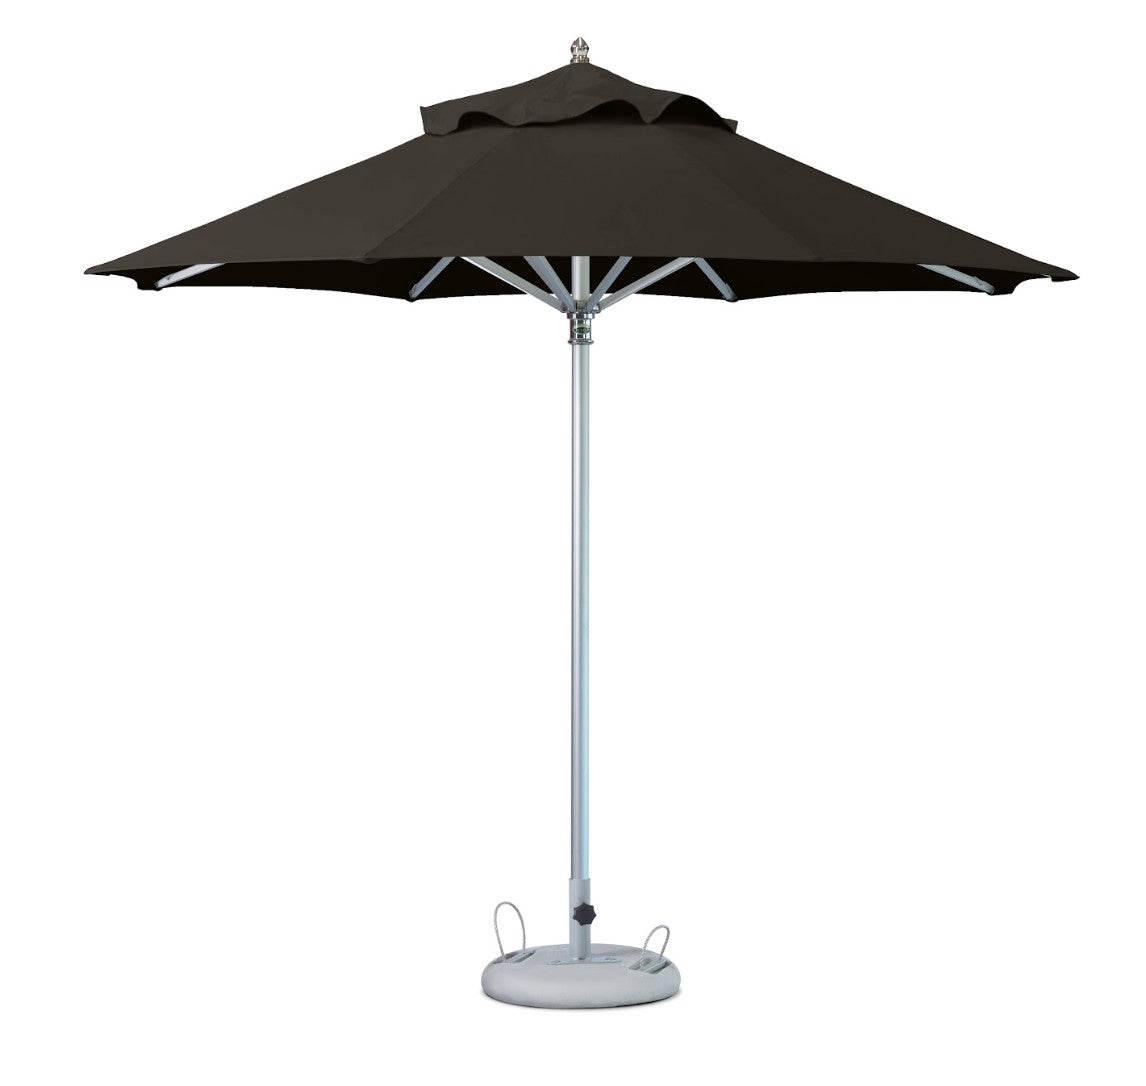 10' Black Polyester Round Market Patio Umbrella